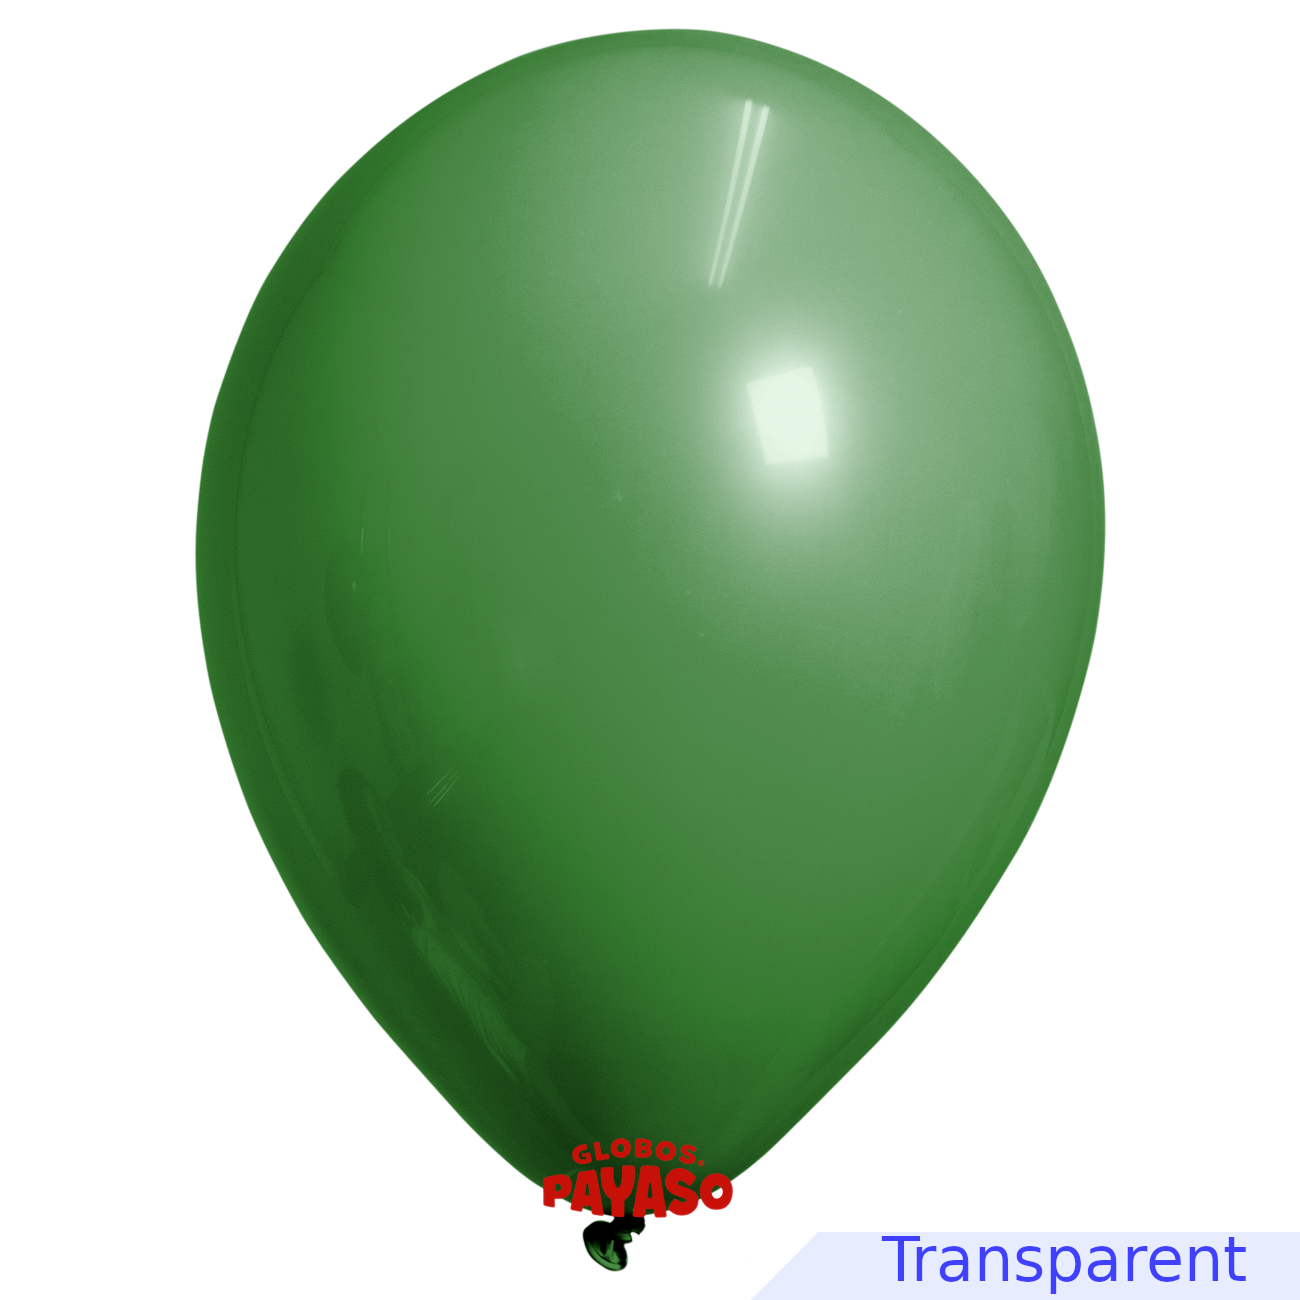 Globos Payaso / Unique 24" Emerald Green Translucid Decorator Balloon